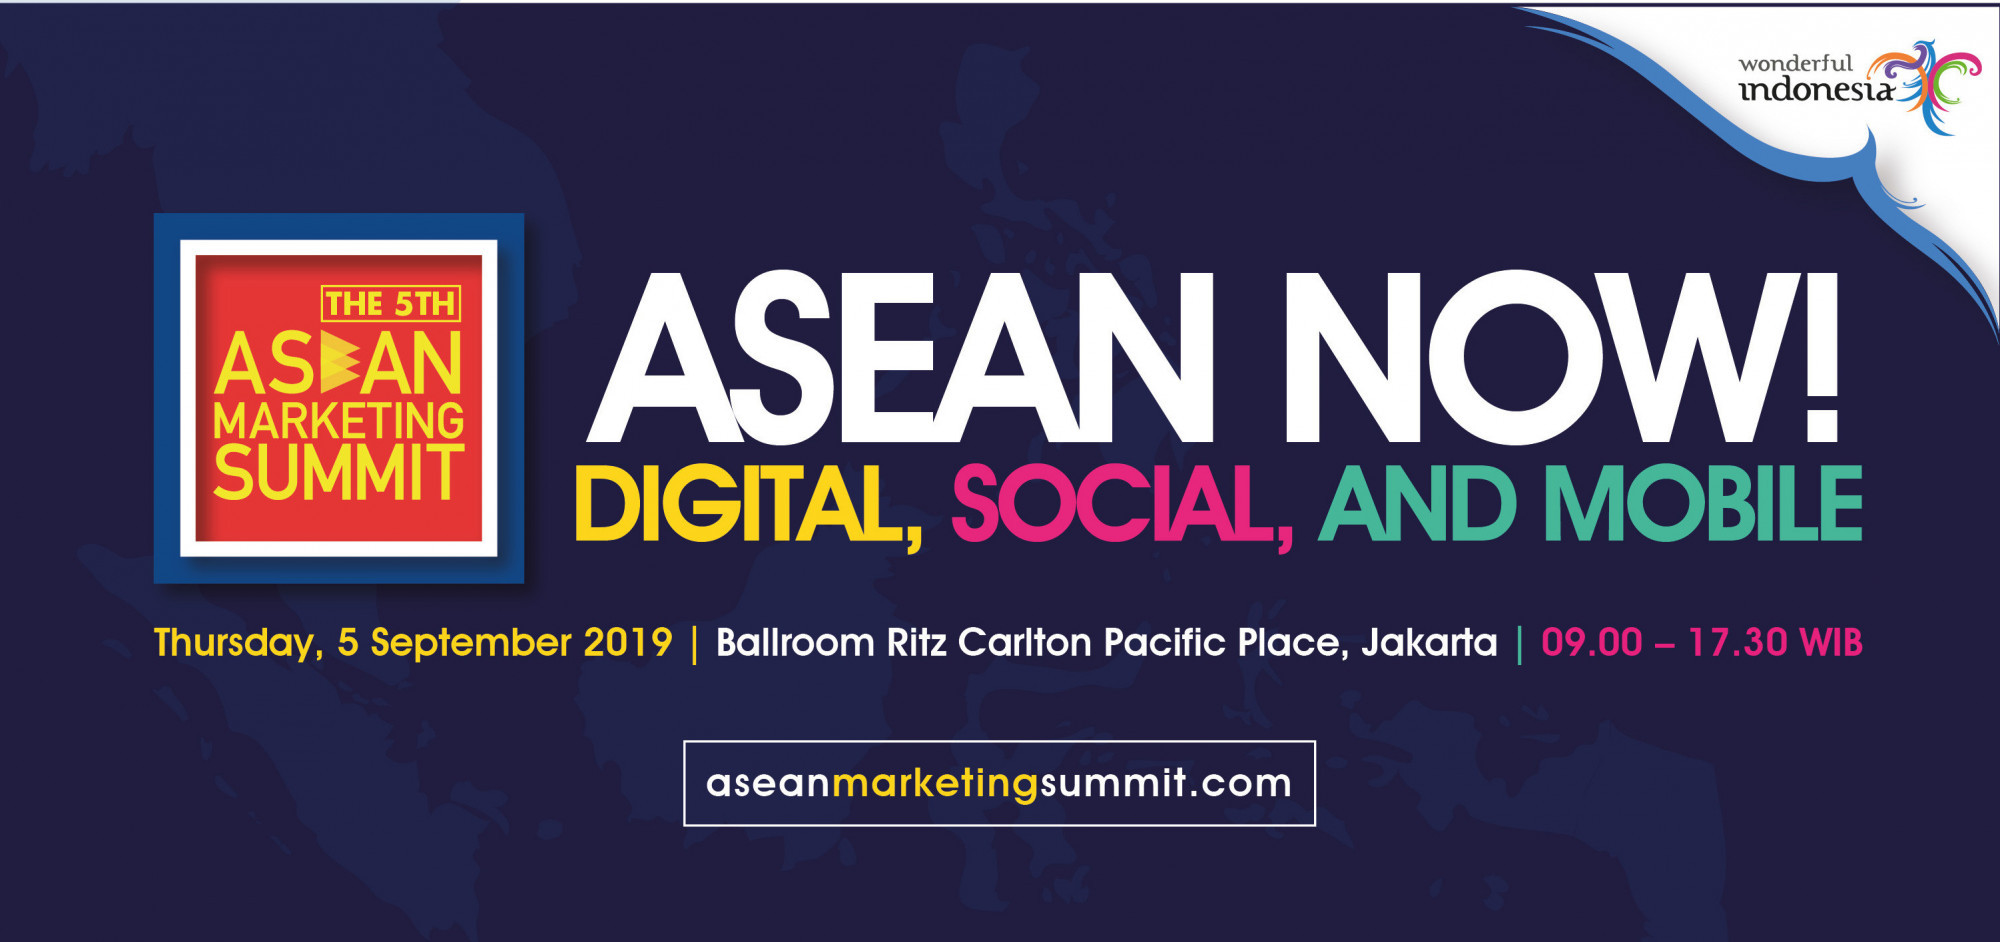 THE 5th ASEAN MARKETING SUMMIT